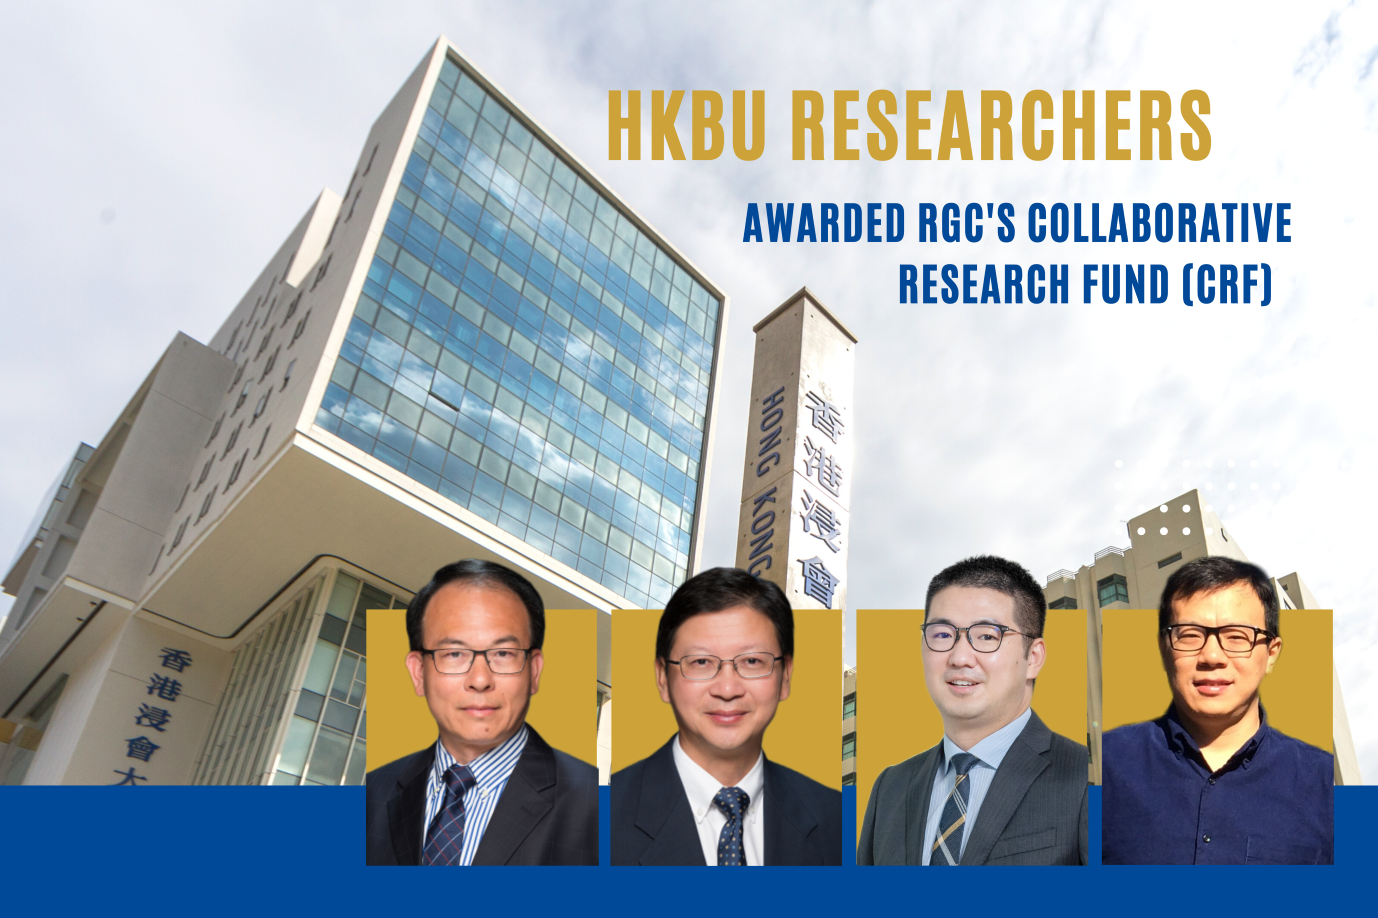 HKBU researchers awarded RGC’s Collaborative Research Fund